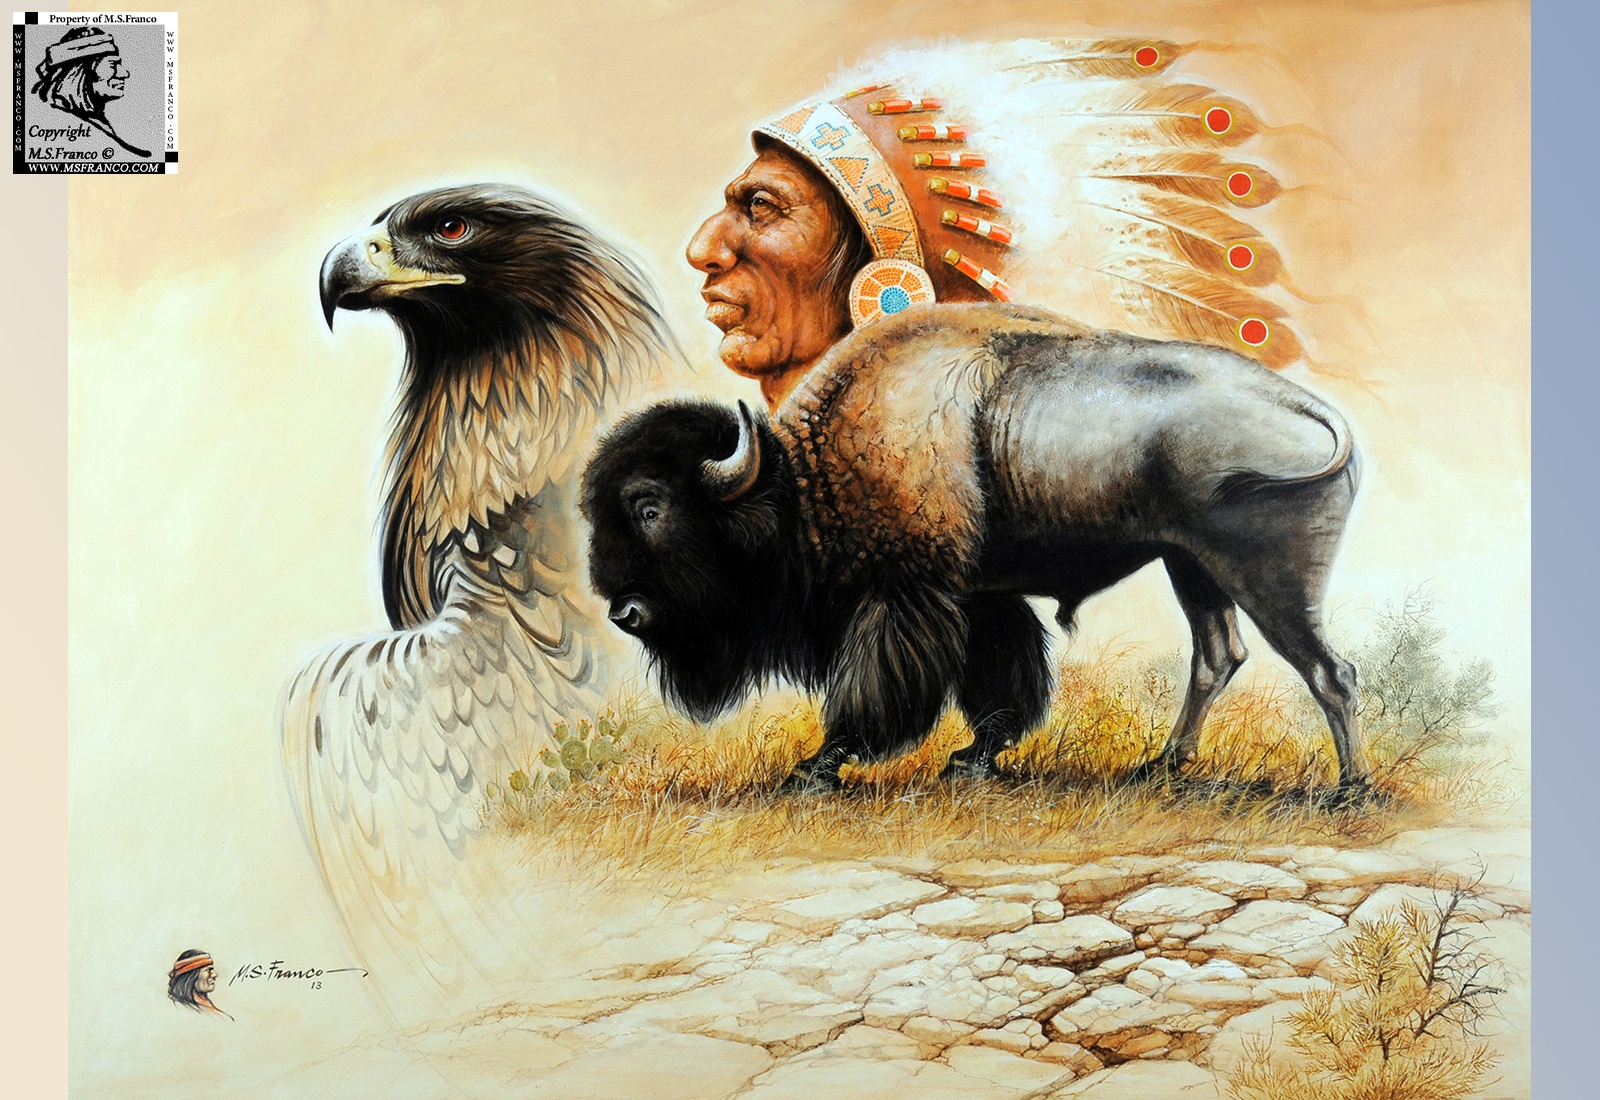 " Spirit of the Natives "
